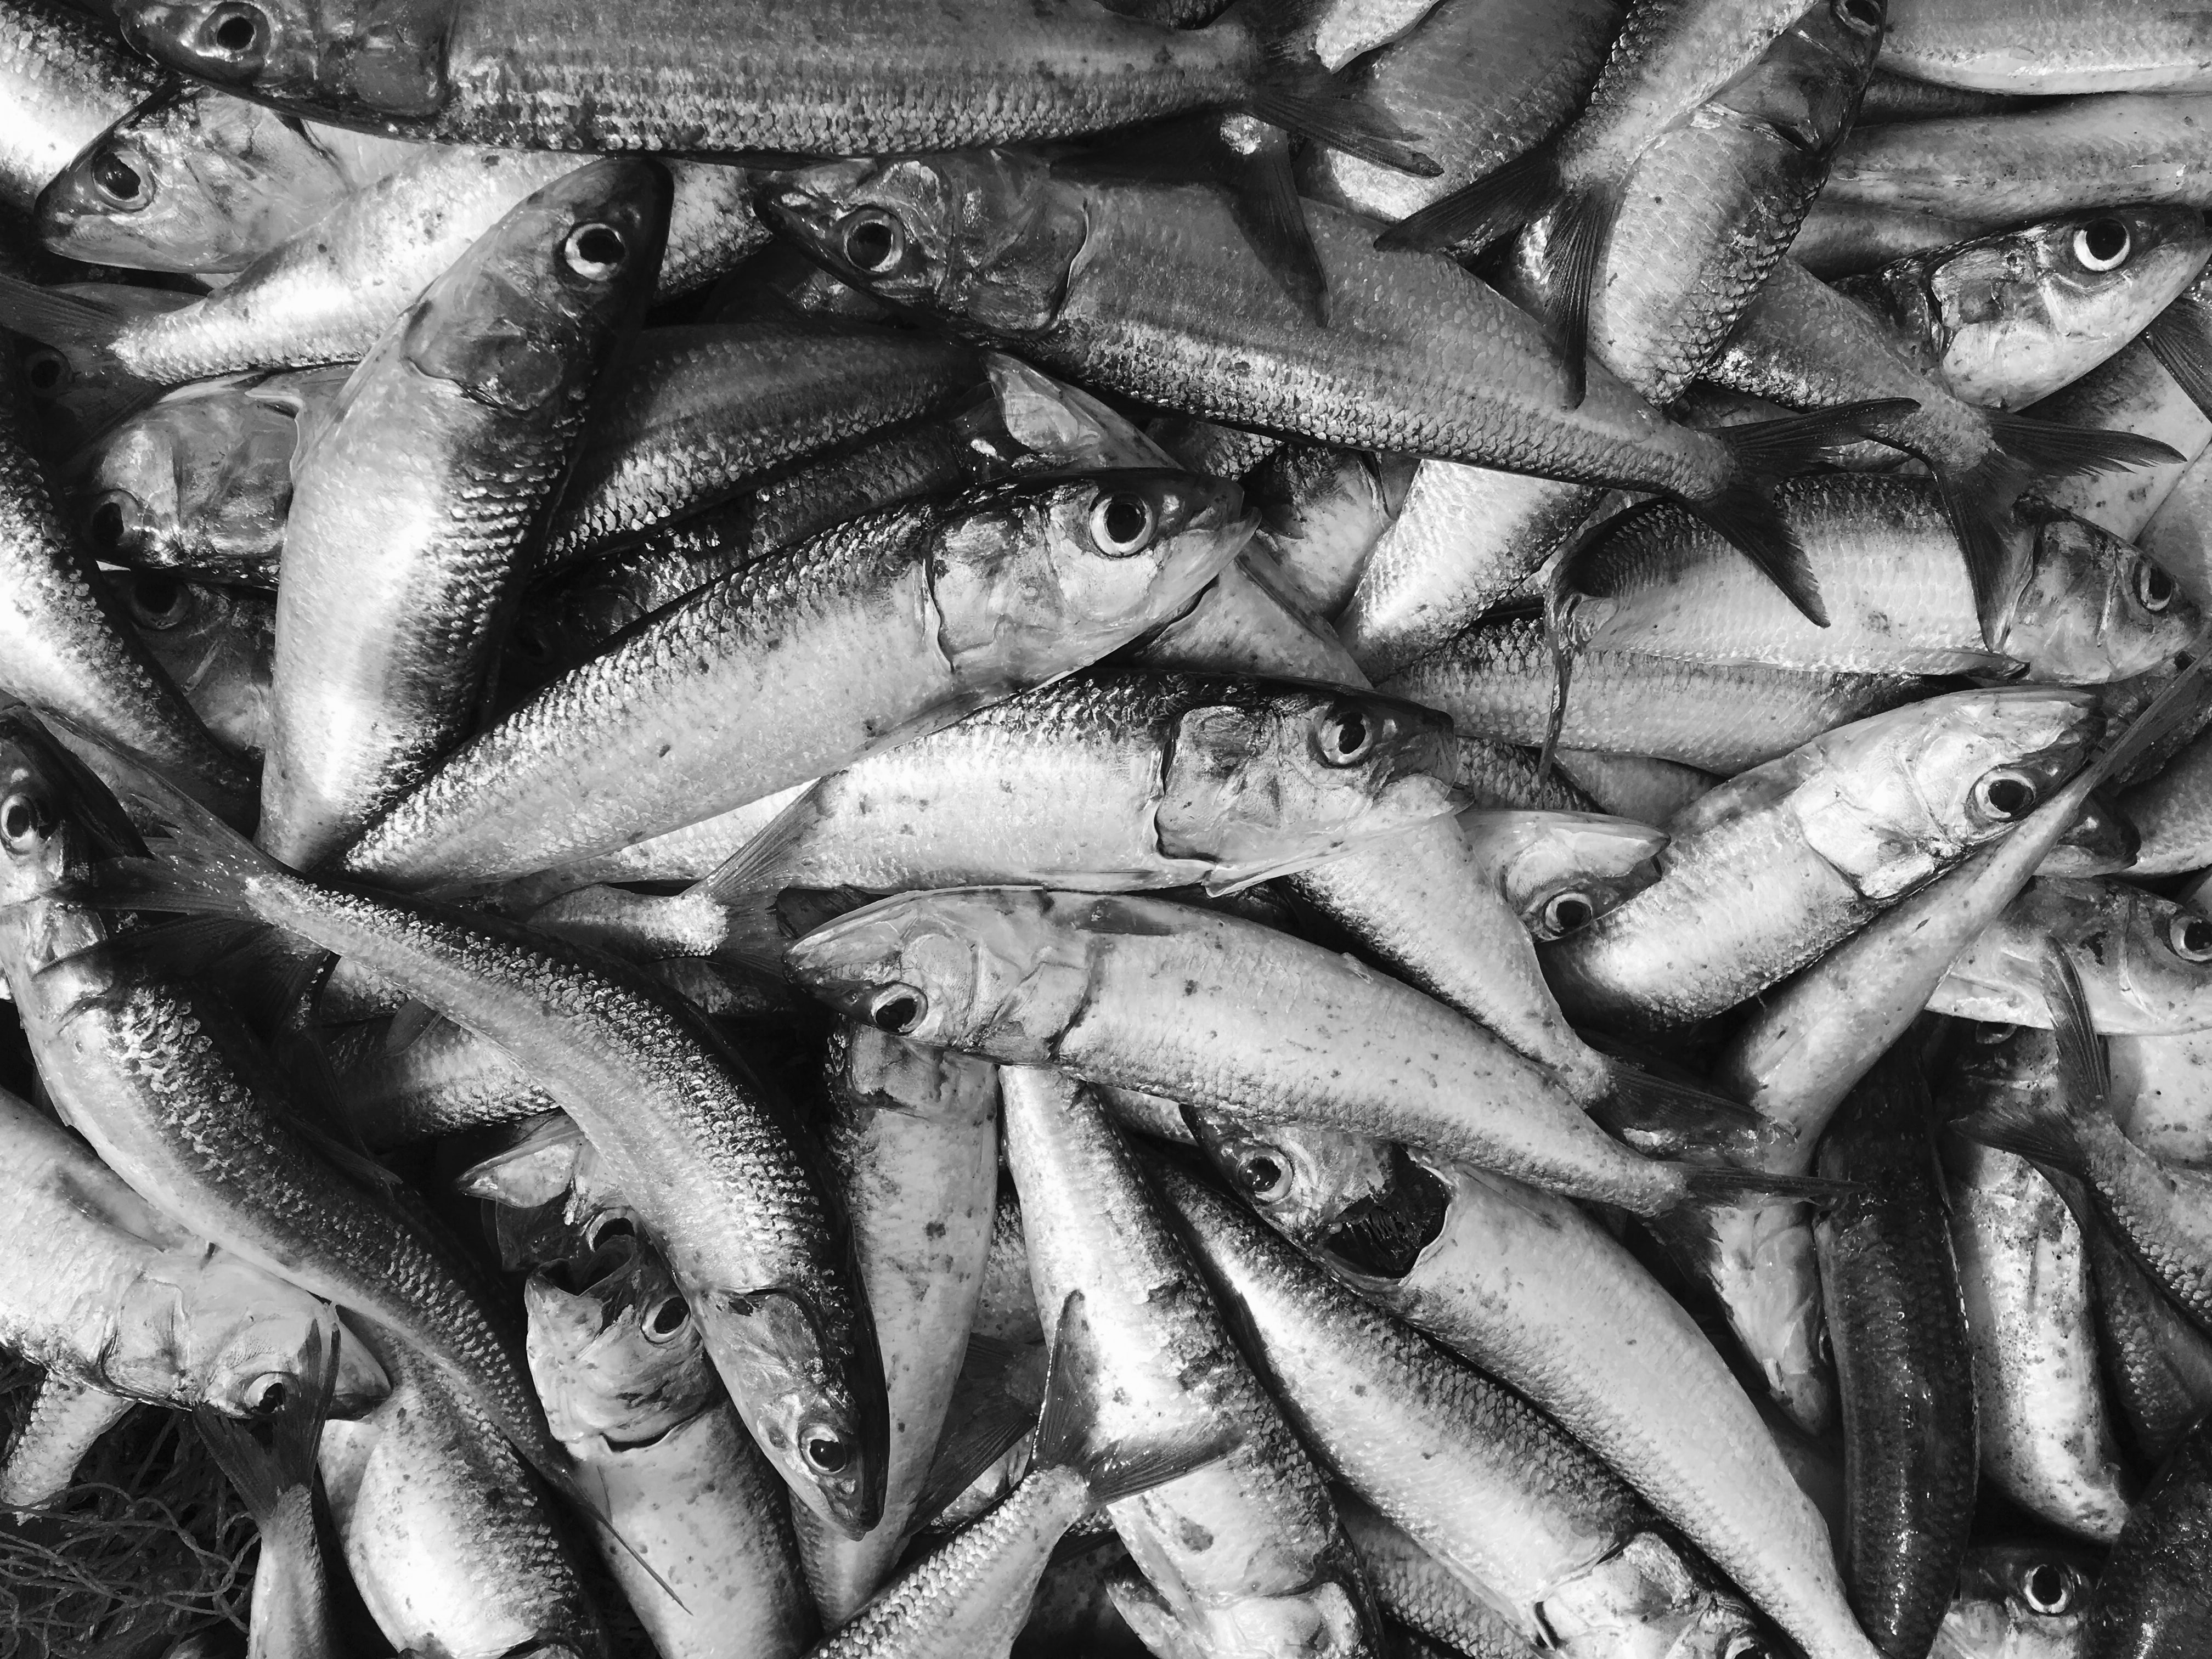 fish at market in gray tones